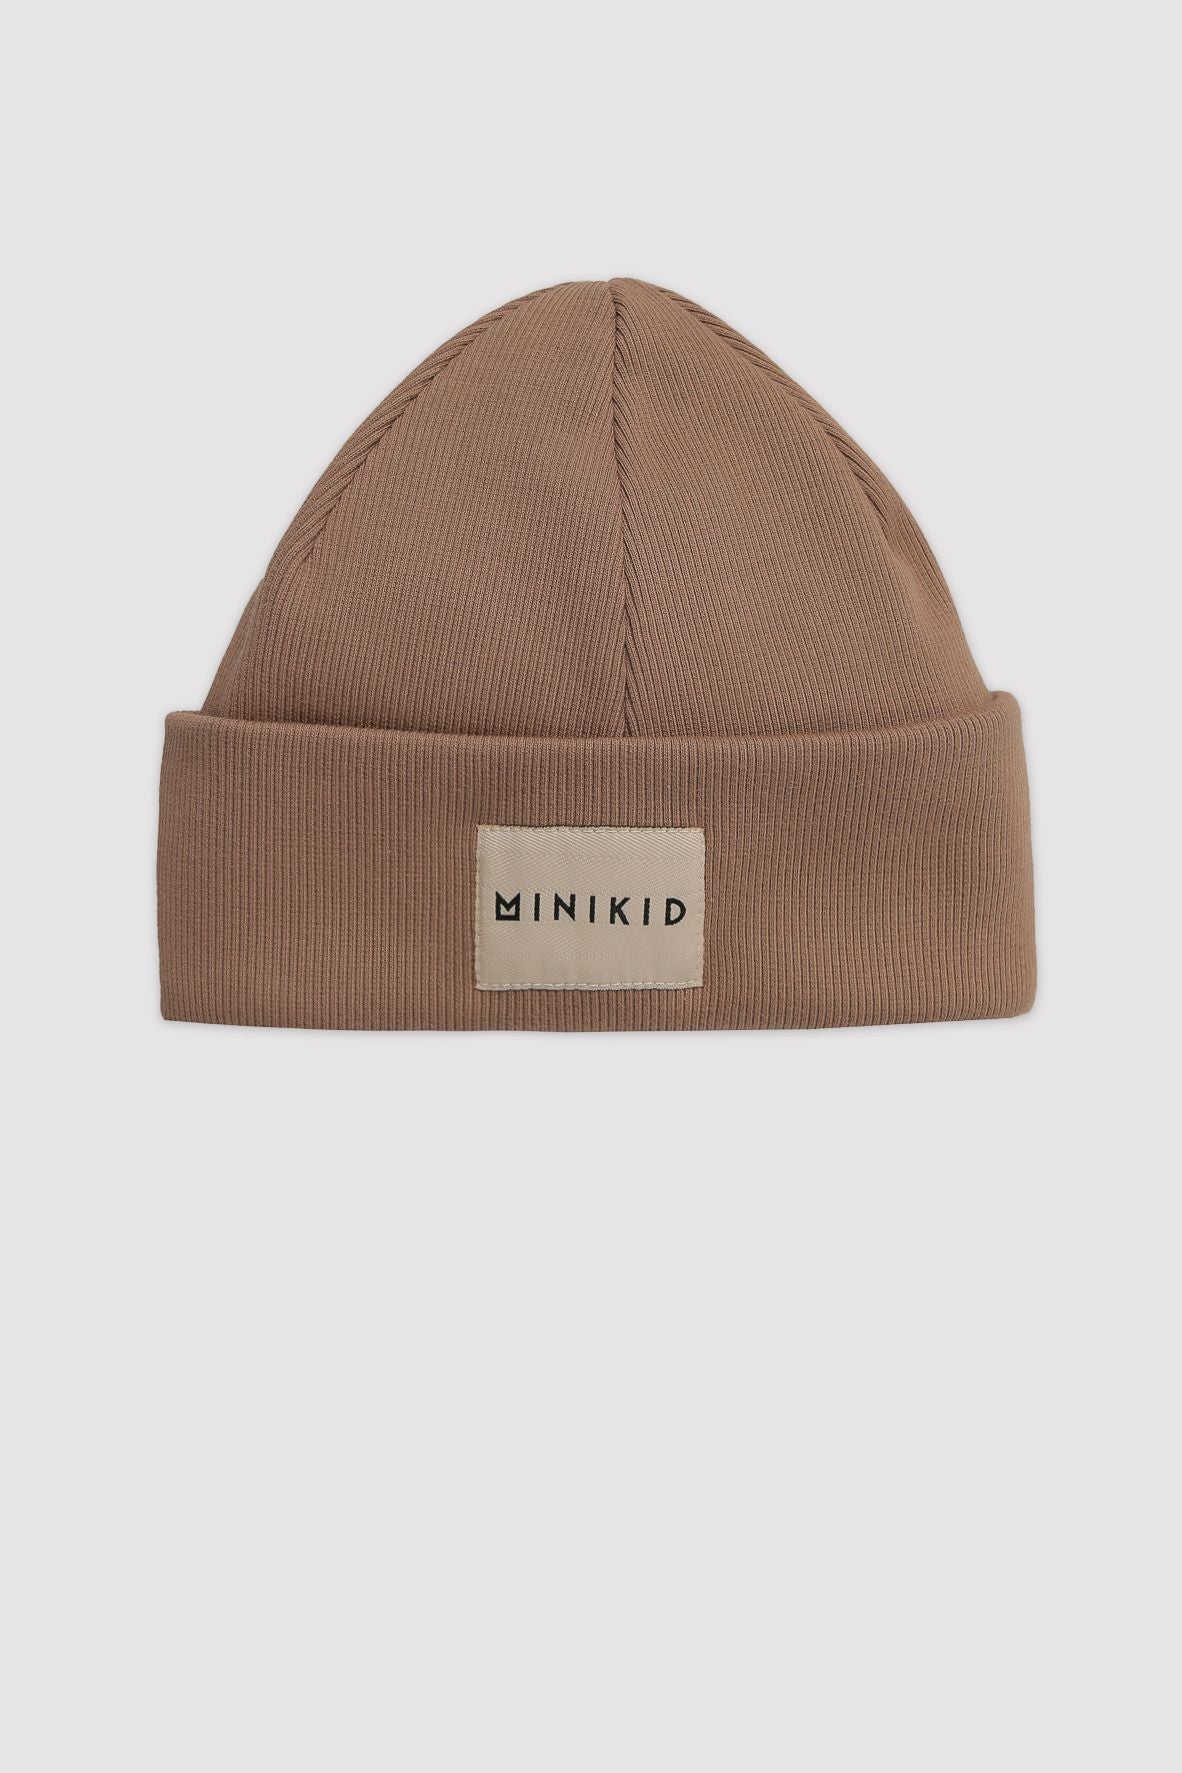 Minikid - Carmel Ribbed Hat